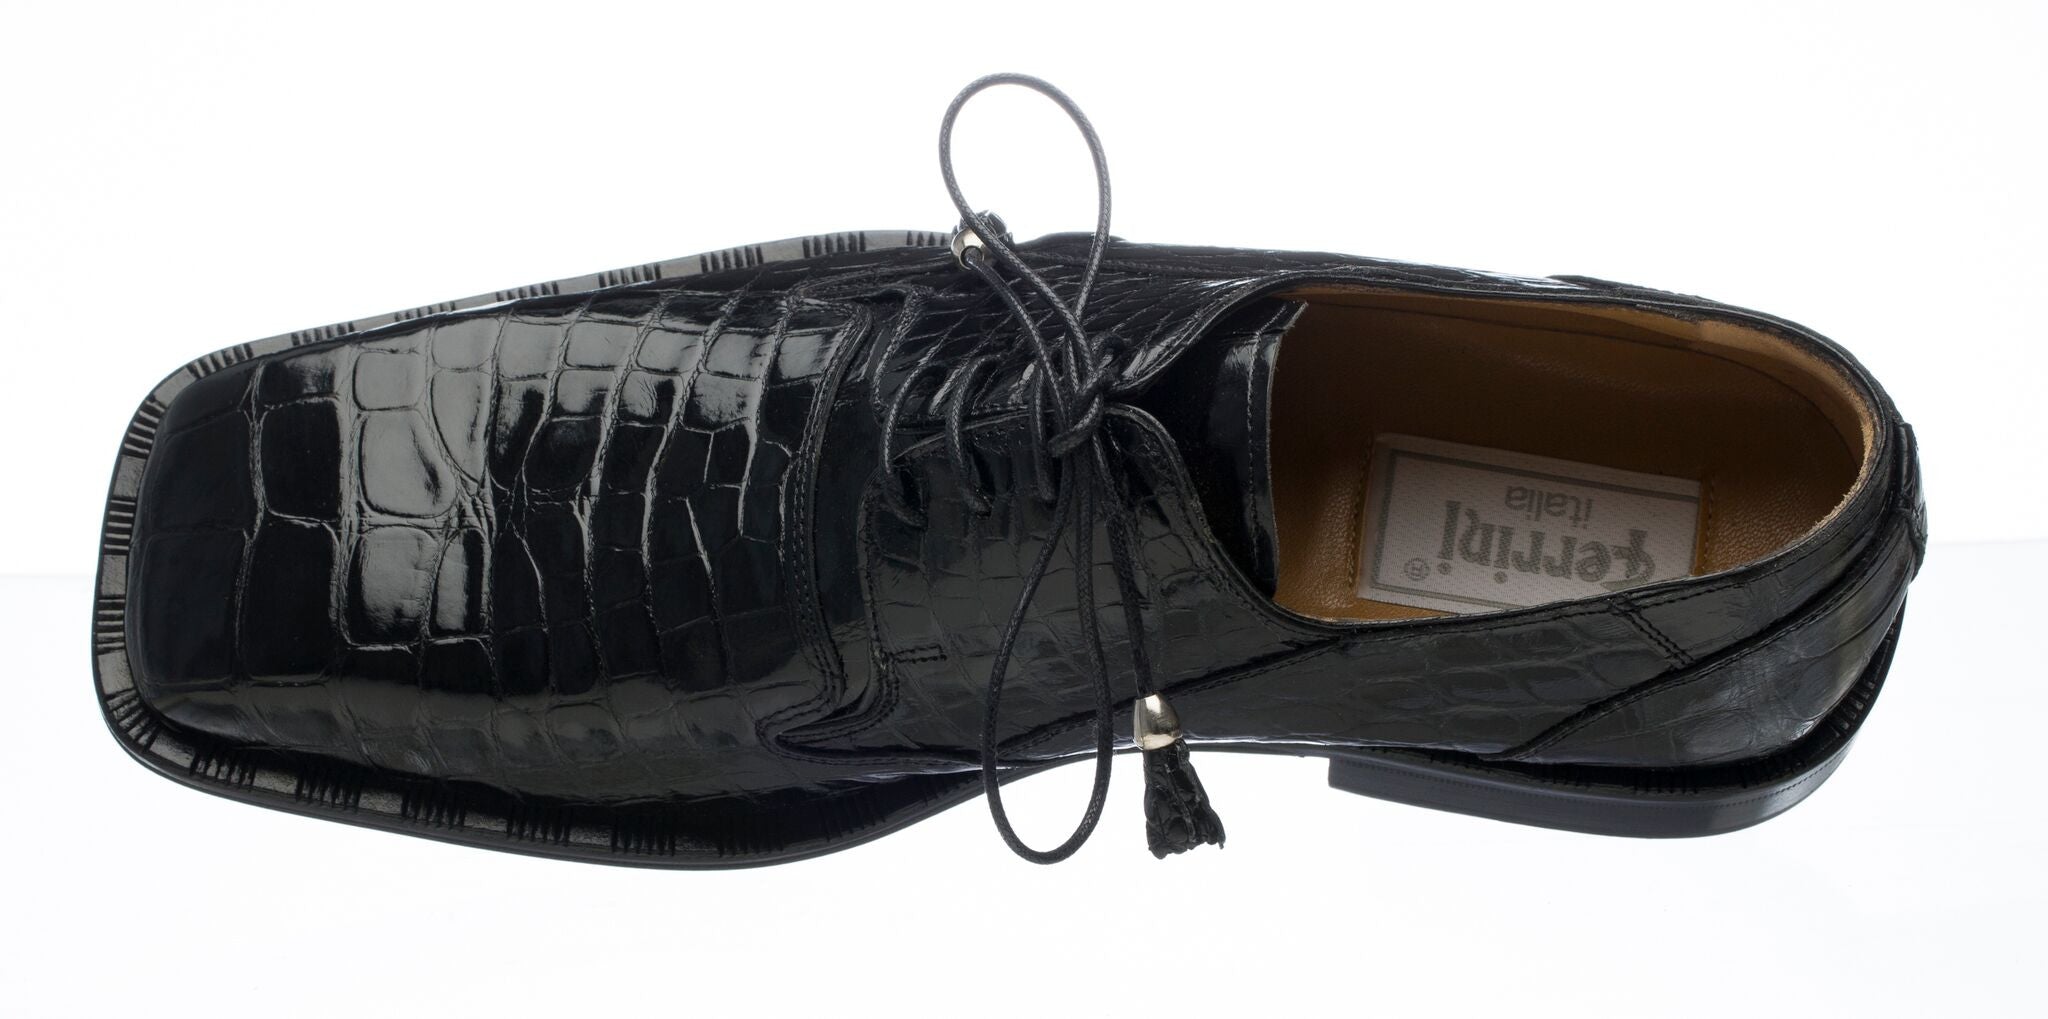 R. Ferrini Men's Italian Black & White Leather Wingtip Oxfords Size 7.5 |  eBay